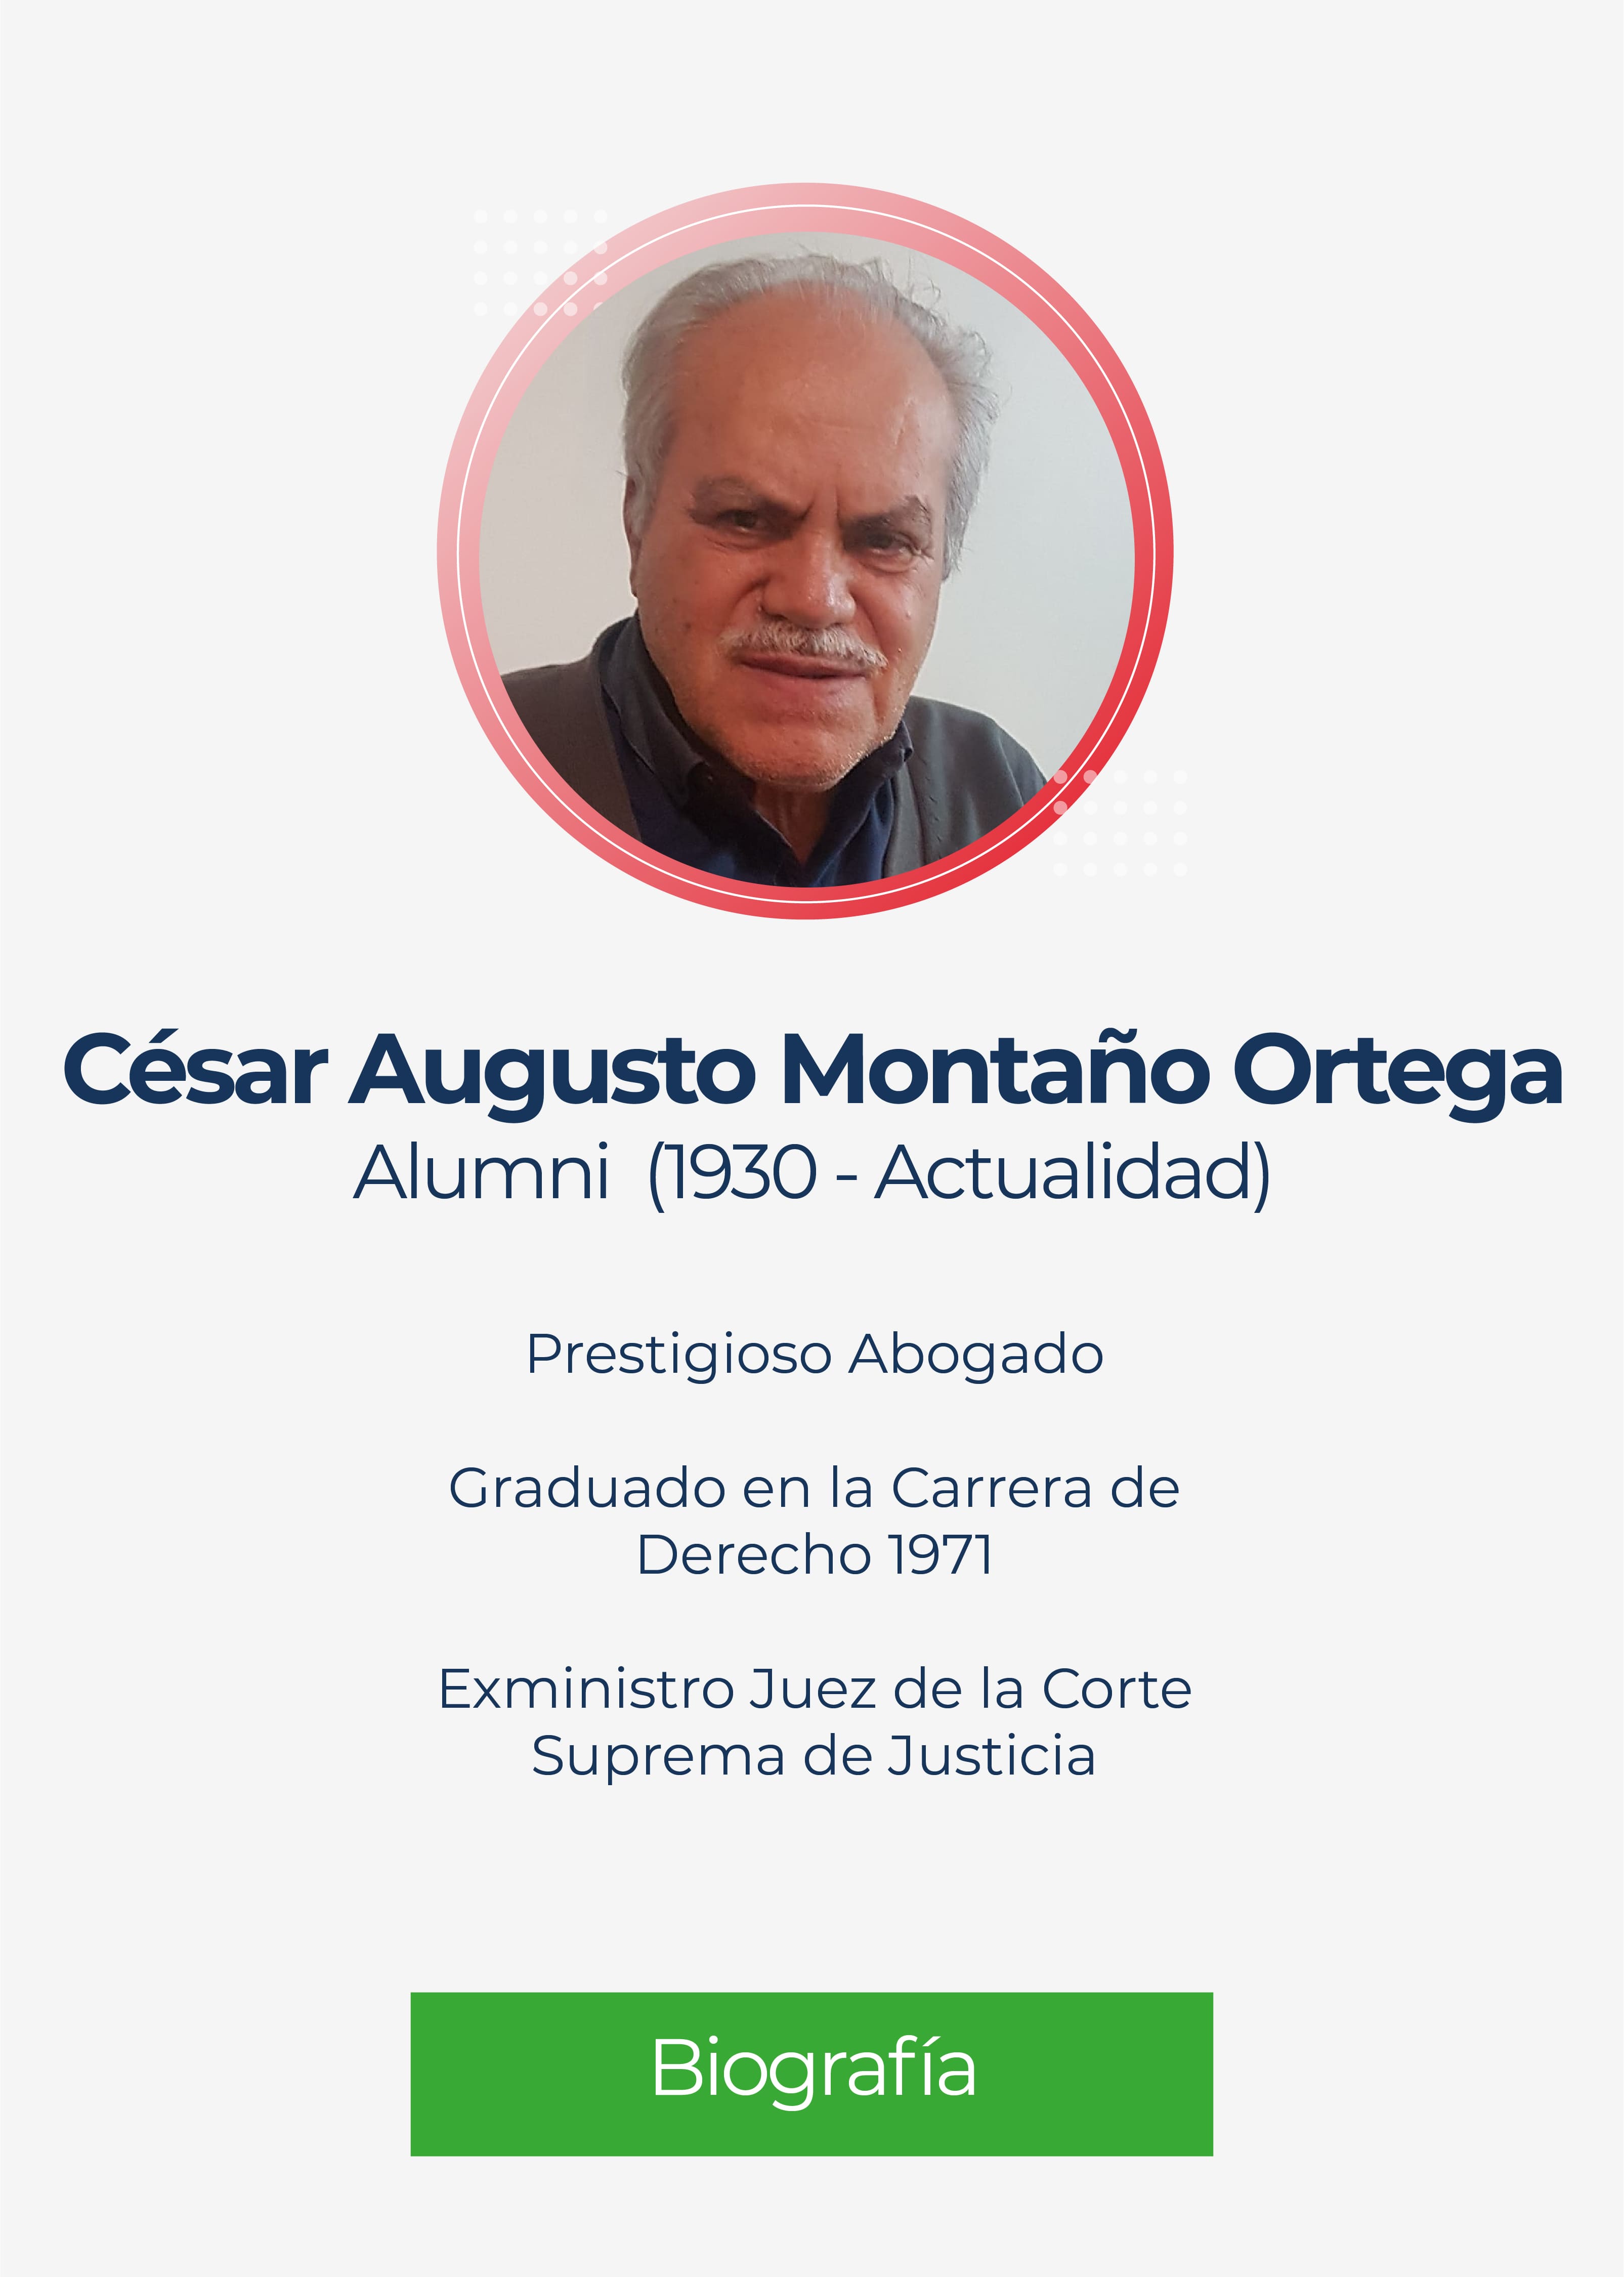 César Augusto Montaño Ortega